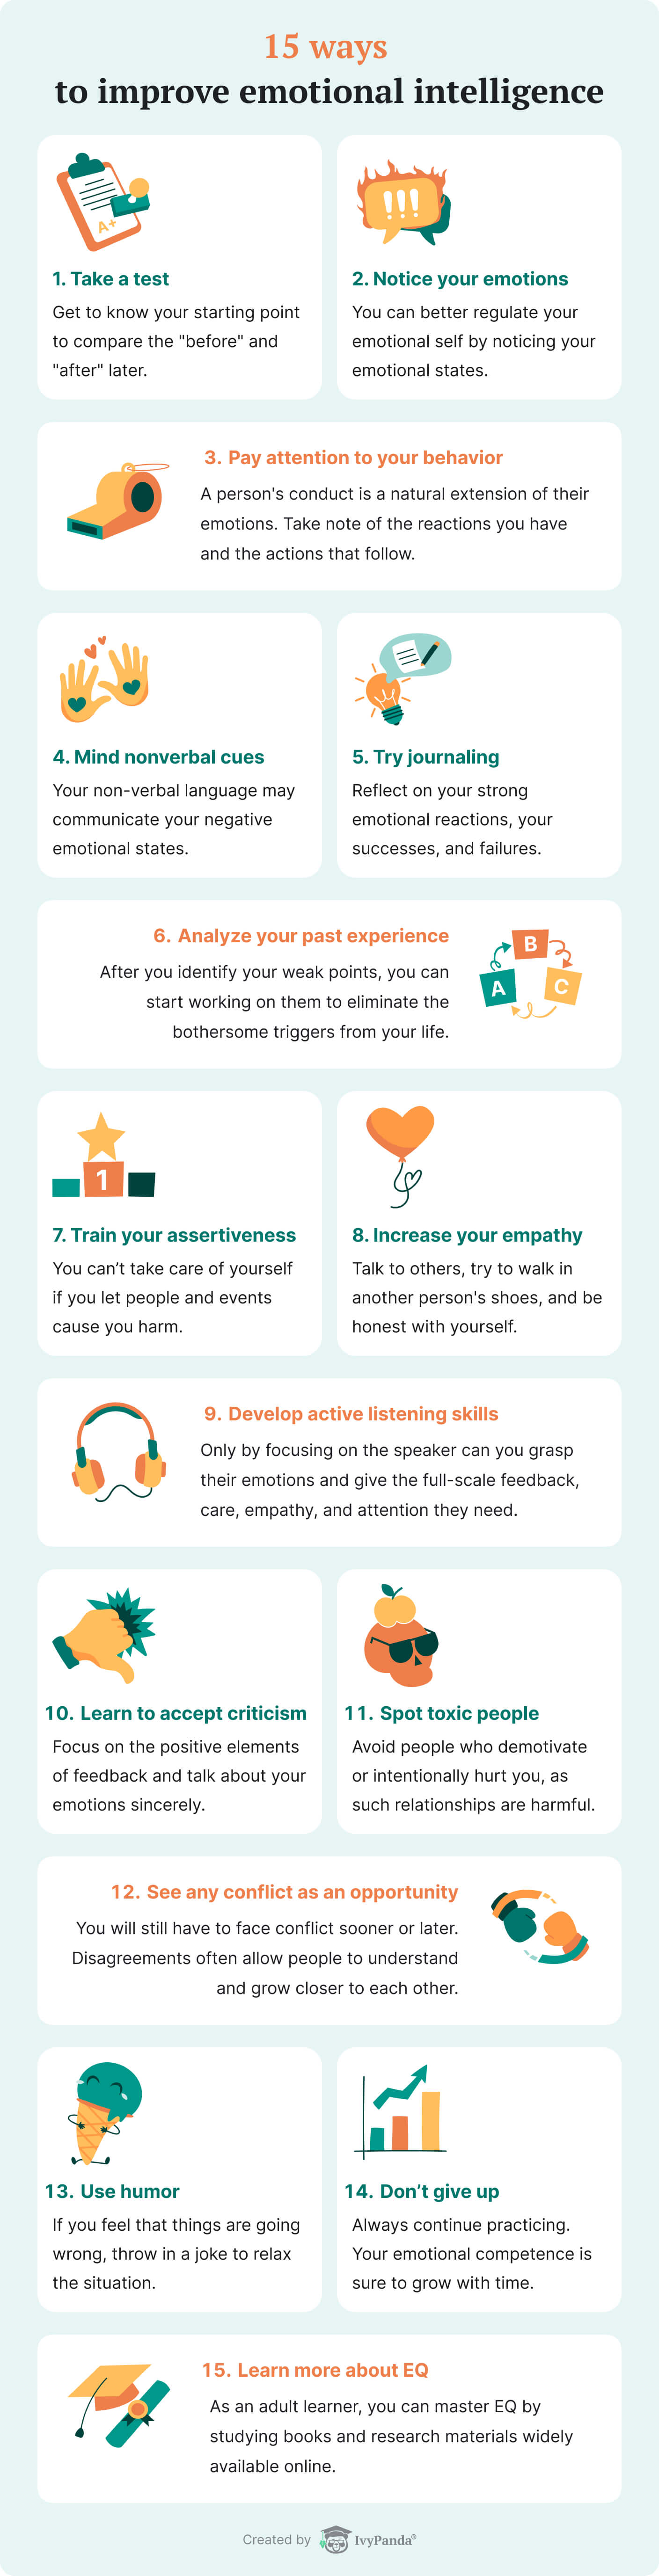 The infographic illustrates 15 ways to improve one's emotional intelligence.